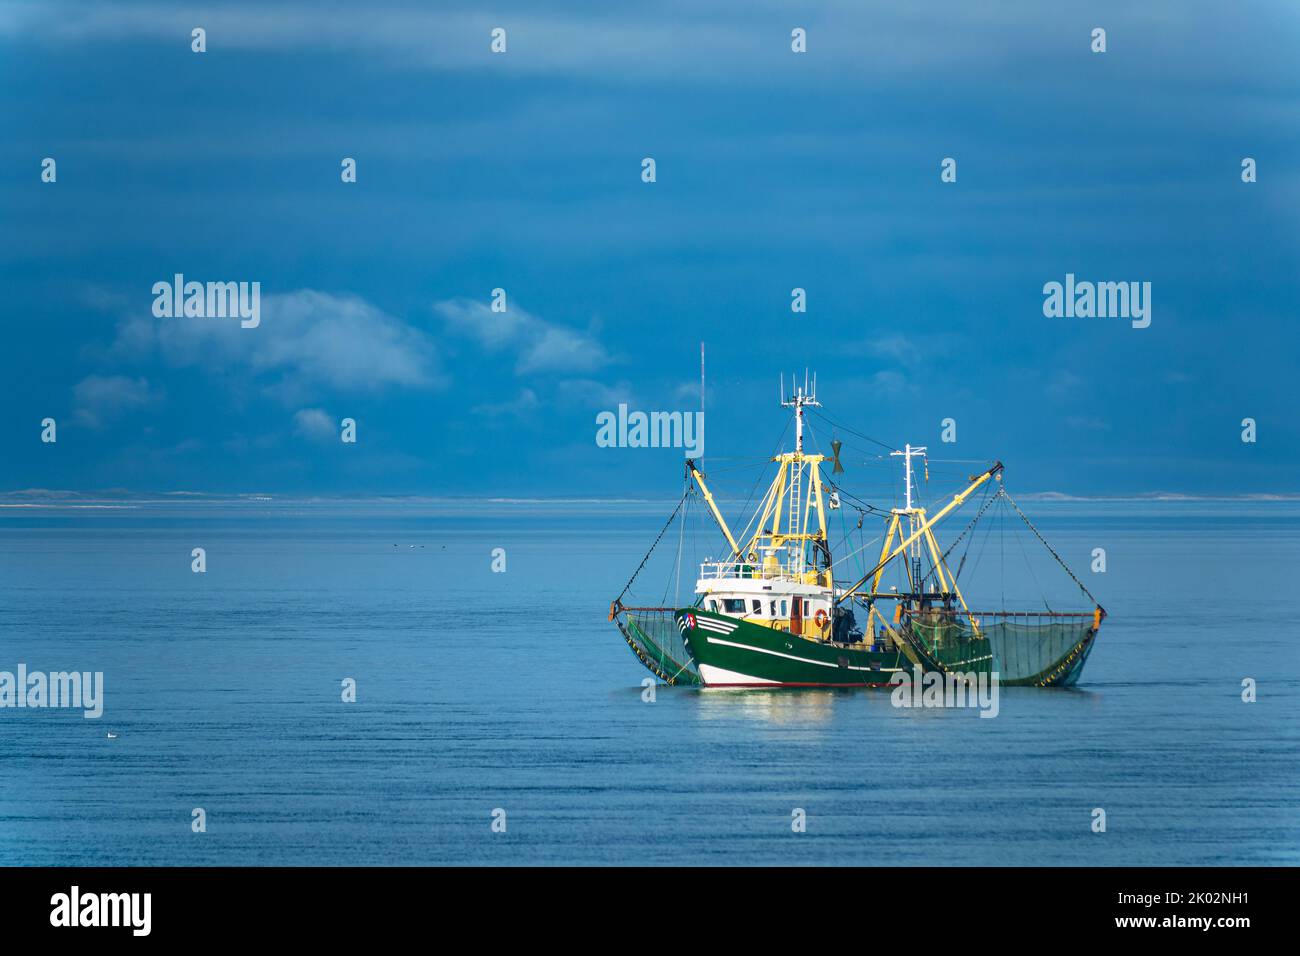 Shrimp boat on the North Sea, Germany. Stock Photo